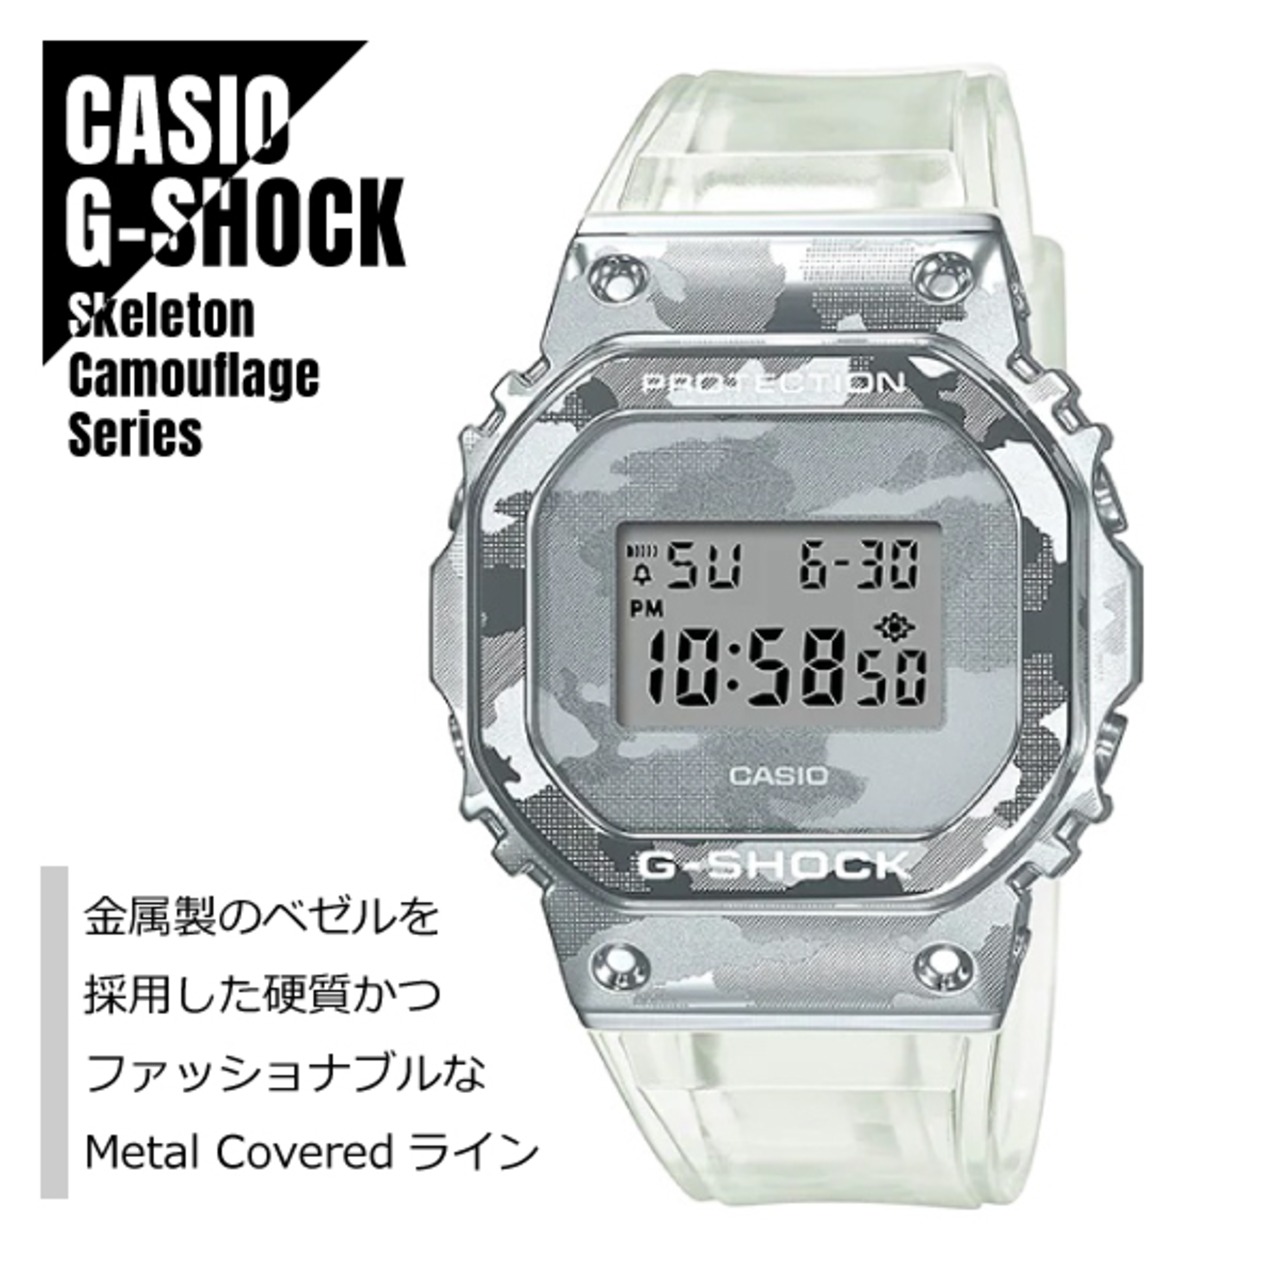 CASIO カシオ G-SHOCK Gショック Skeleton Camouflage Series スケルトン カモフラージュシリーズ GM-5600SCM-1 腕時計 メンズ レディース